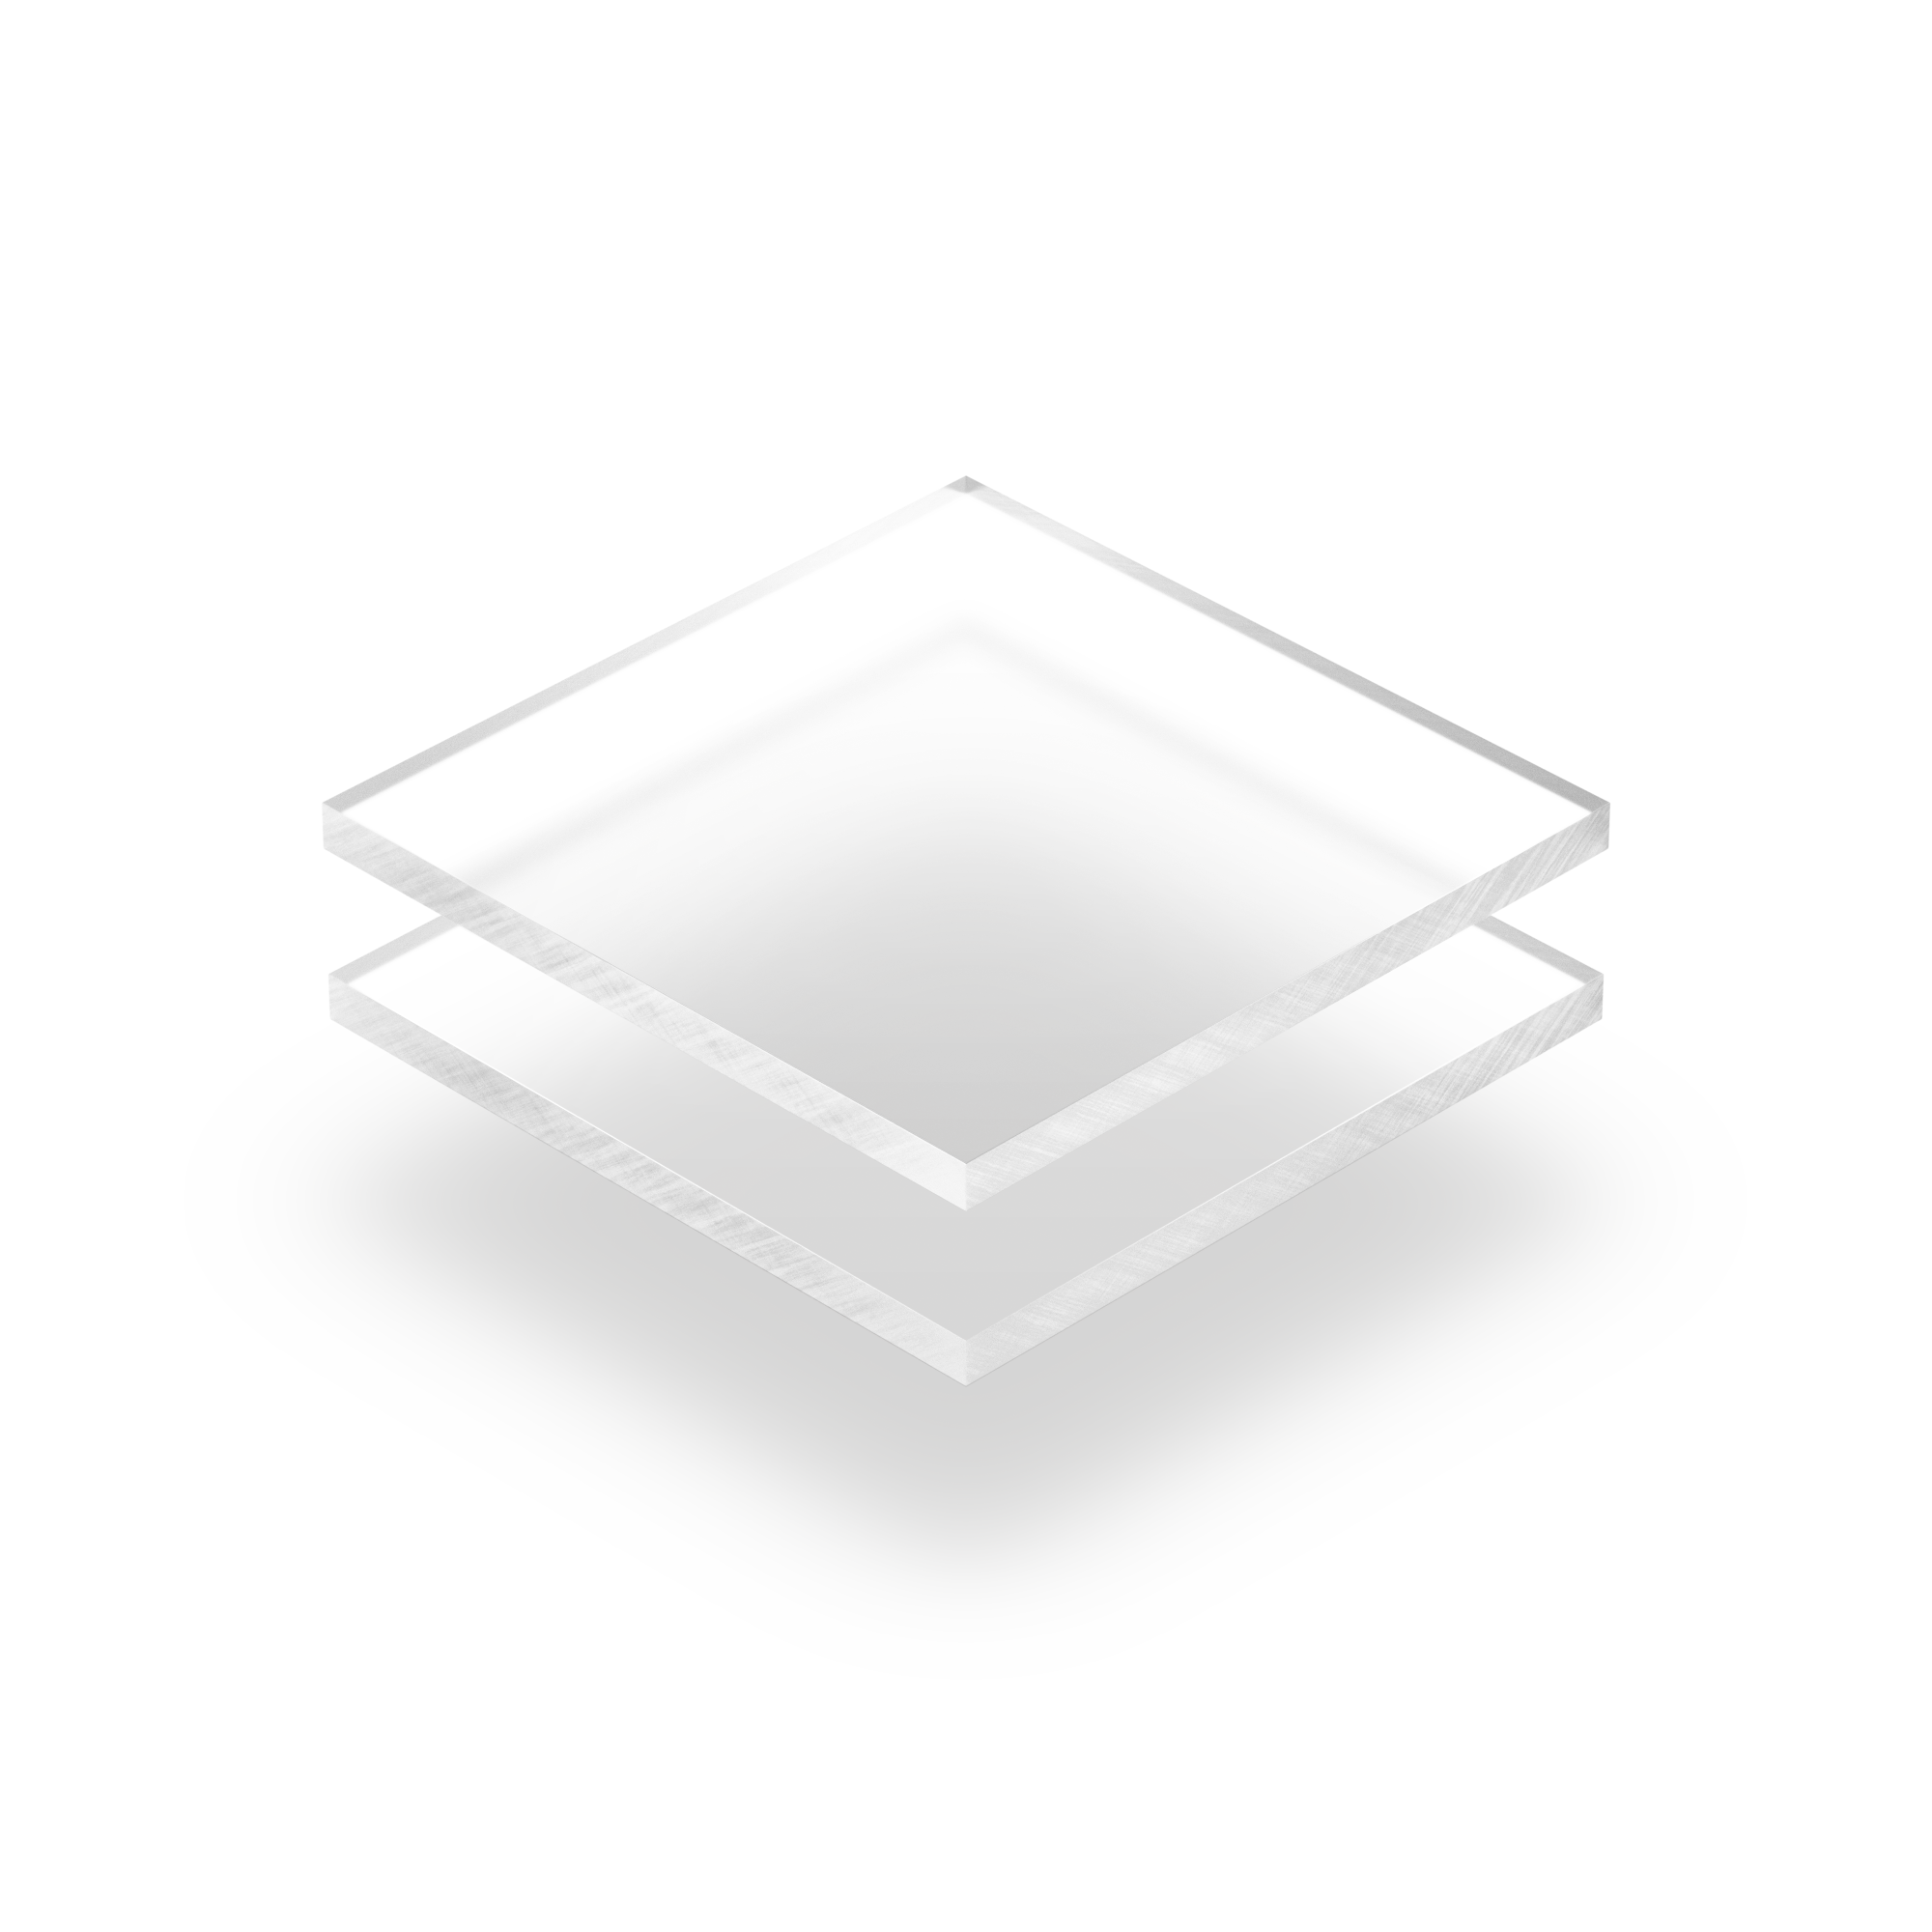 Plaque rond plexi inox - plaque qr code plexiglass aspect givré